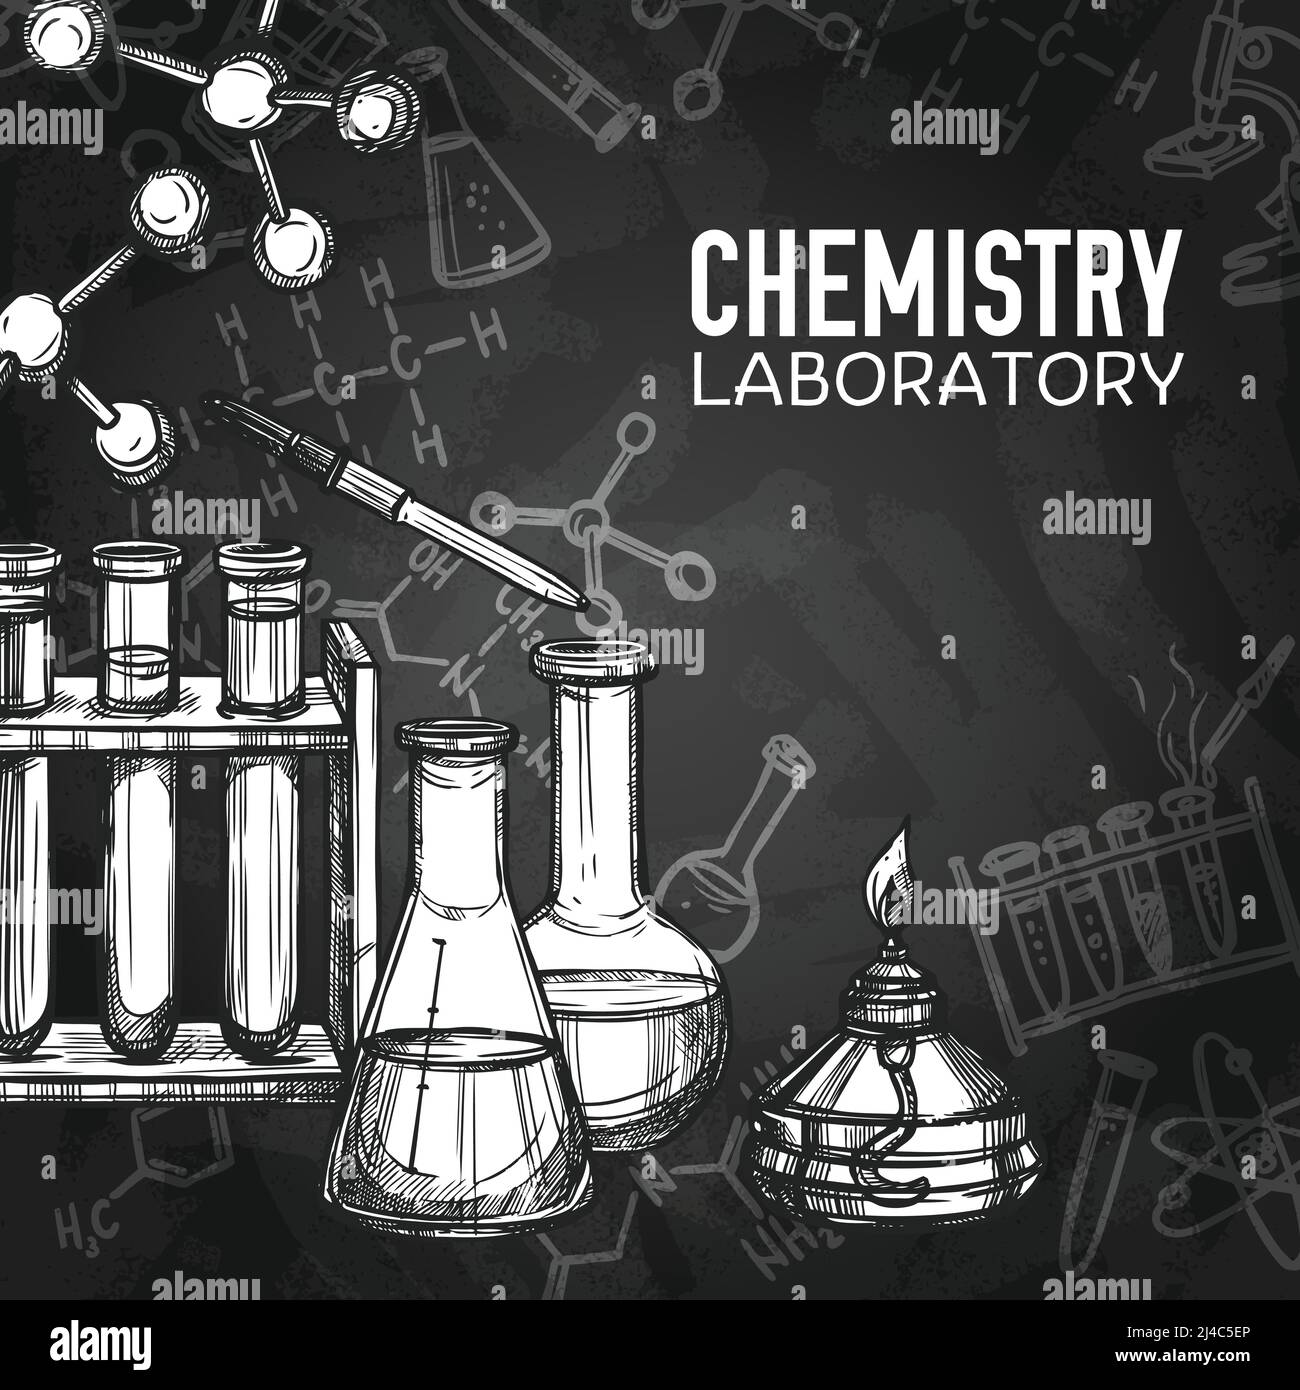 Monochrome chalk draw style sketch of chemistry laboratory equipments